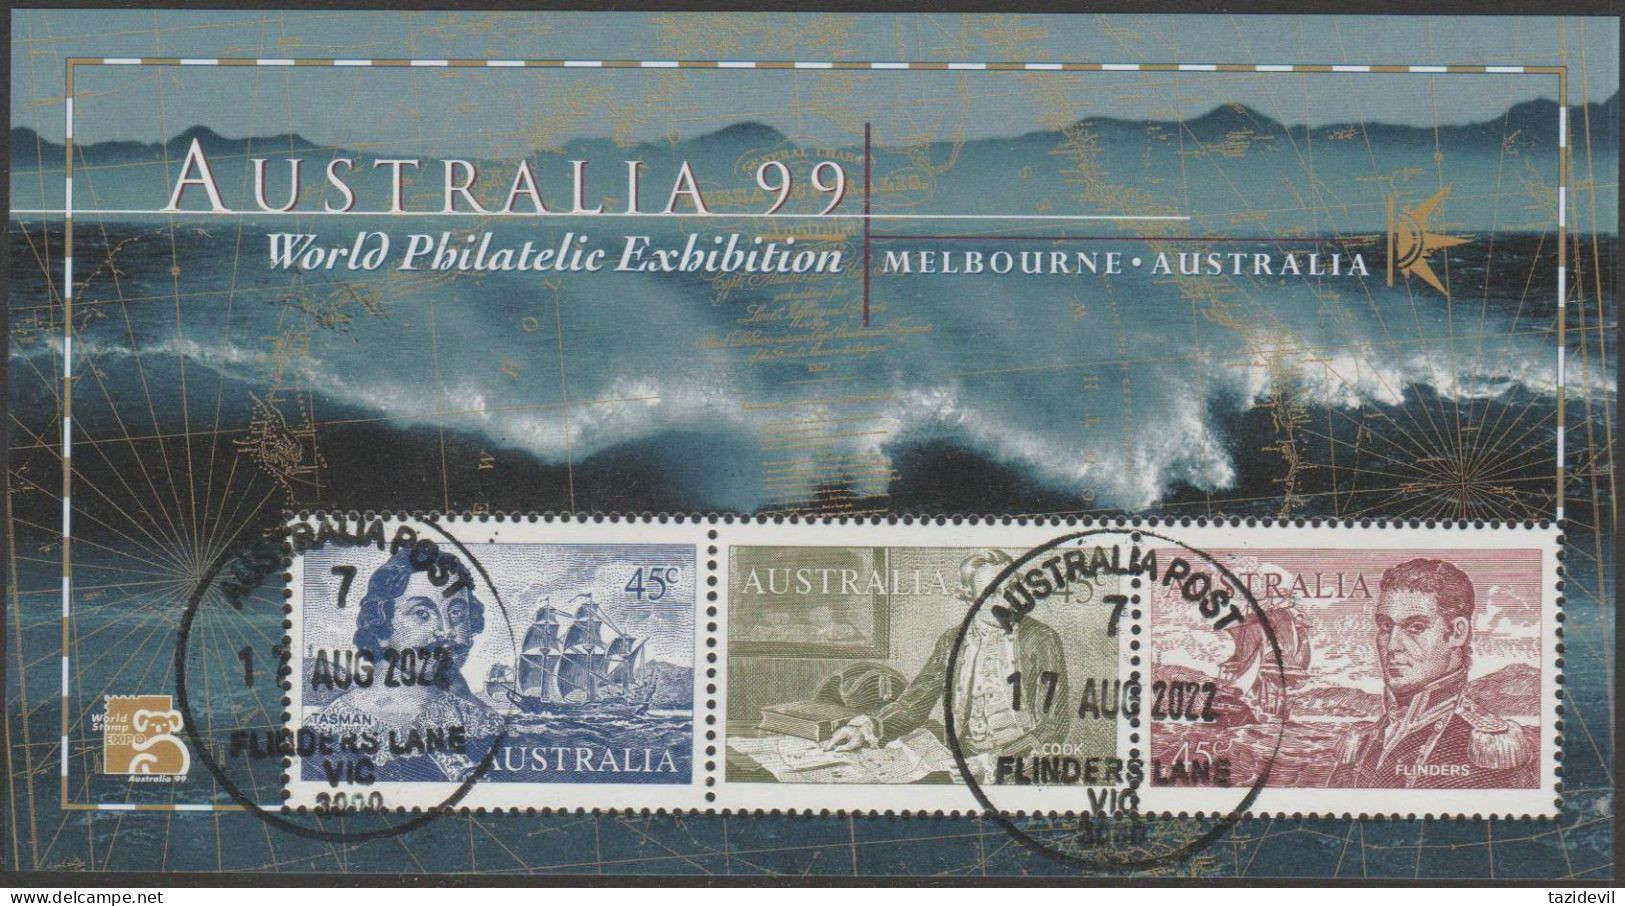 AUSTRALIA - USED 1999 $1.35 Stamp Show '99 Navigator Souvenir Sheet - Gebraucht